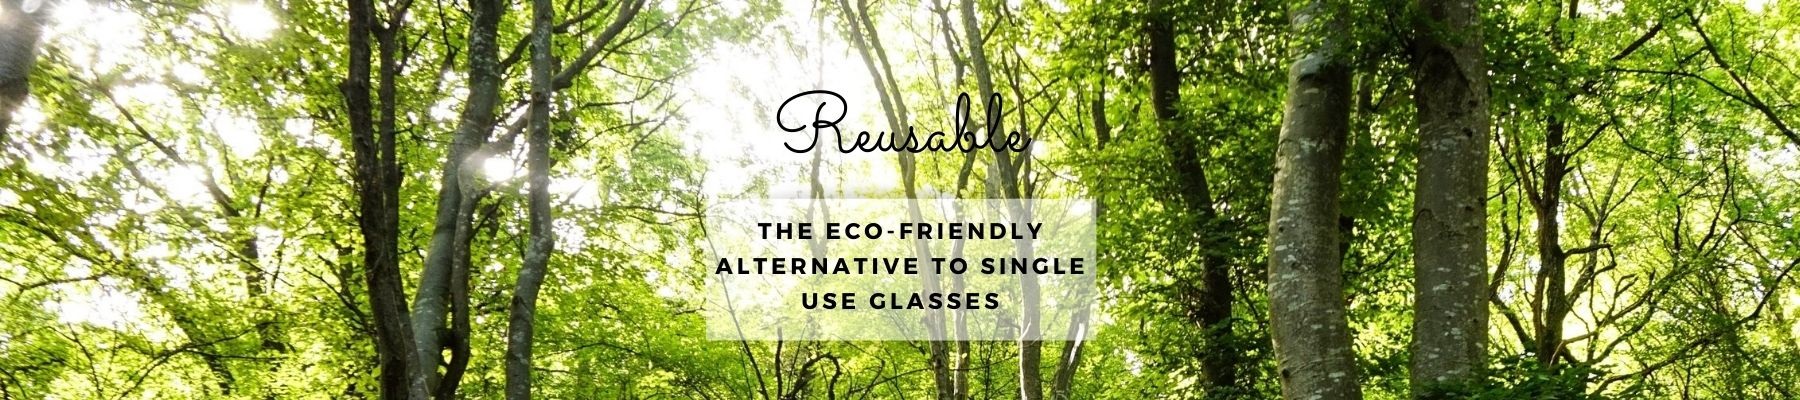 environmentally _friendly_reusable_plastic_glasses